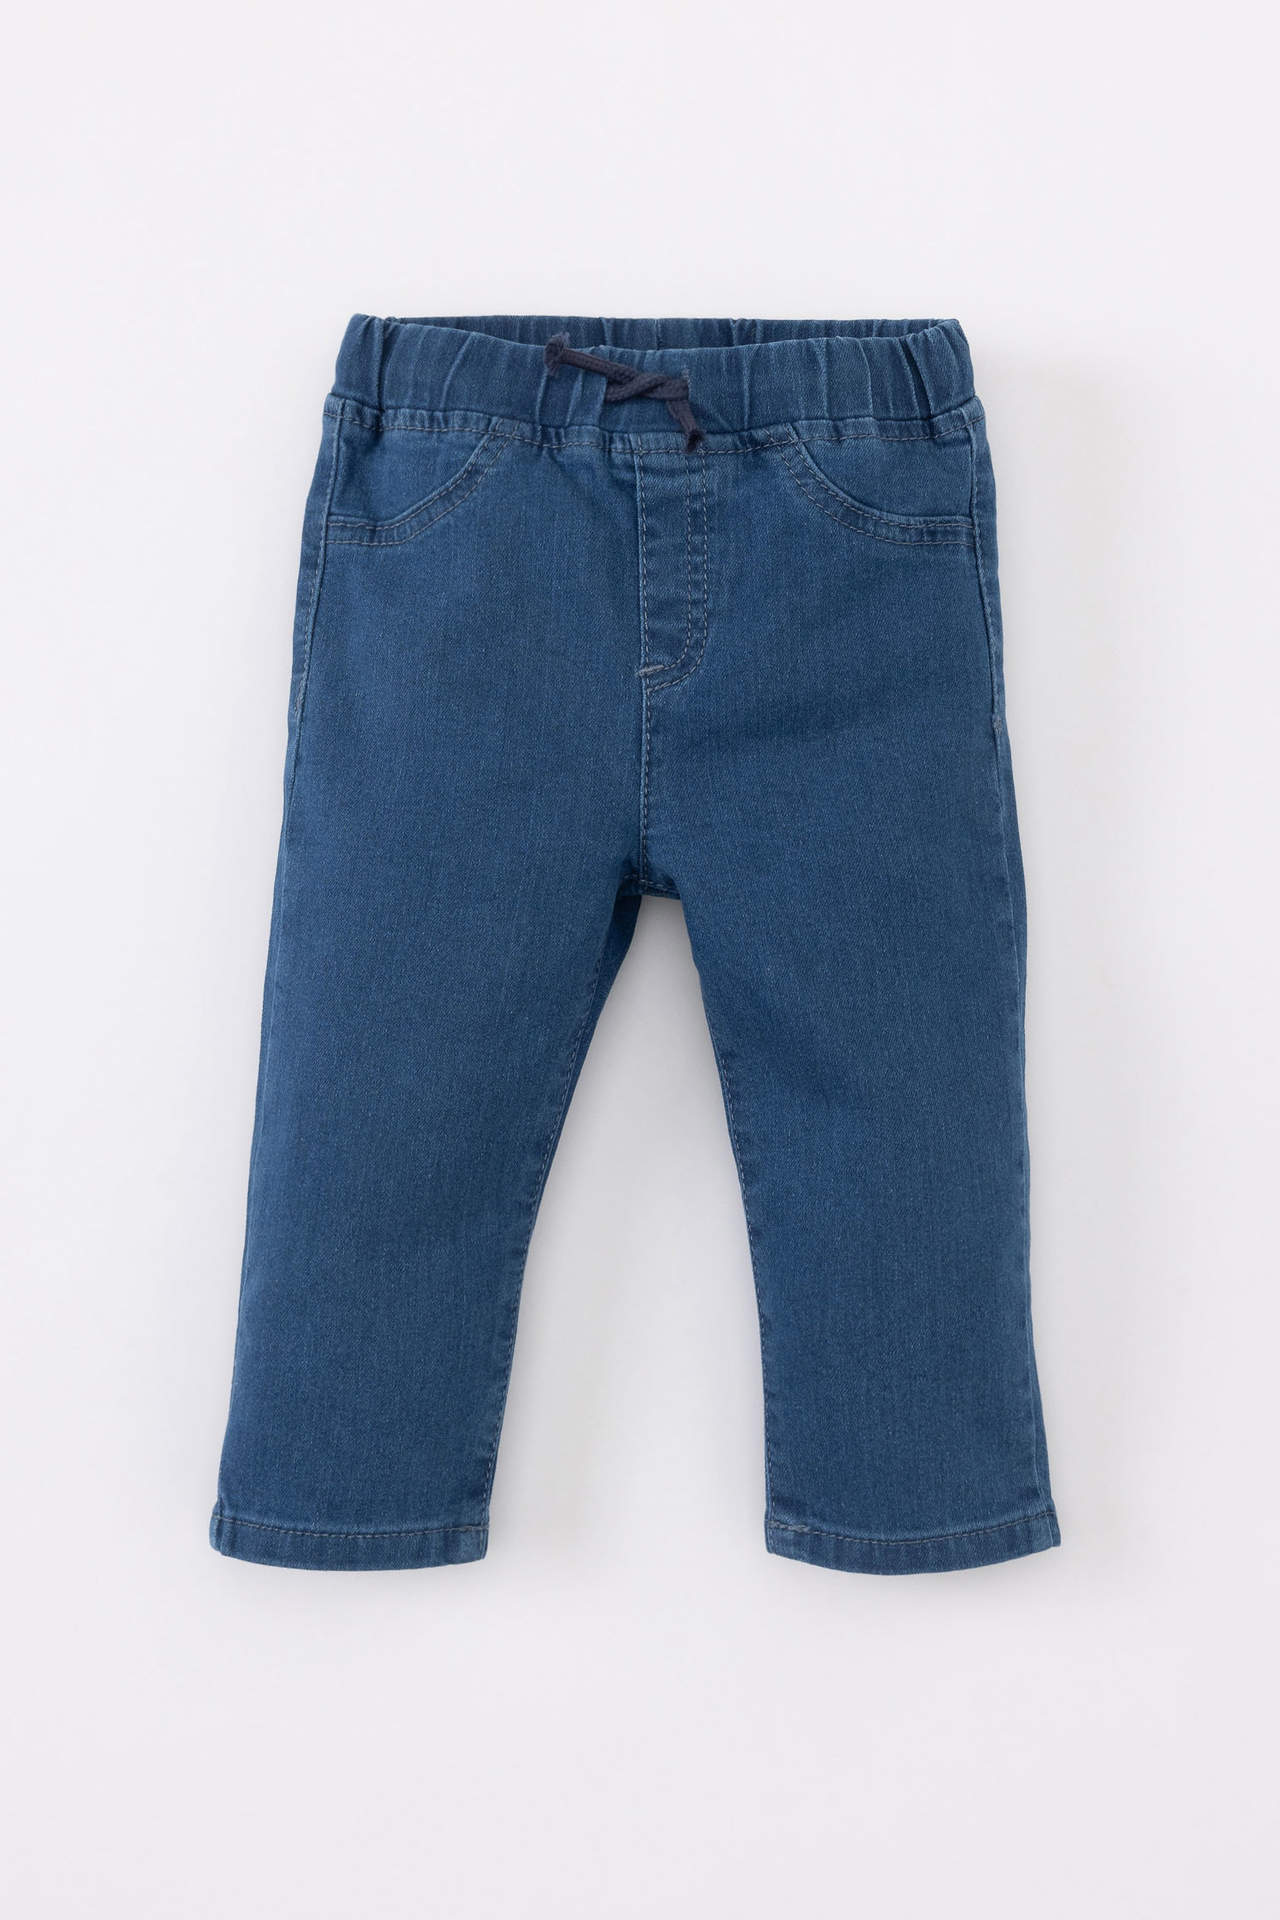 DEFACTO Baby Boy Regular Fit Jean Pants